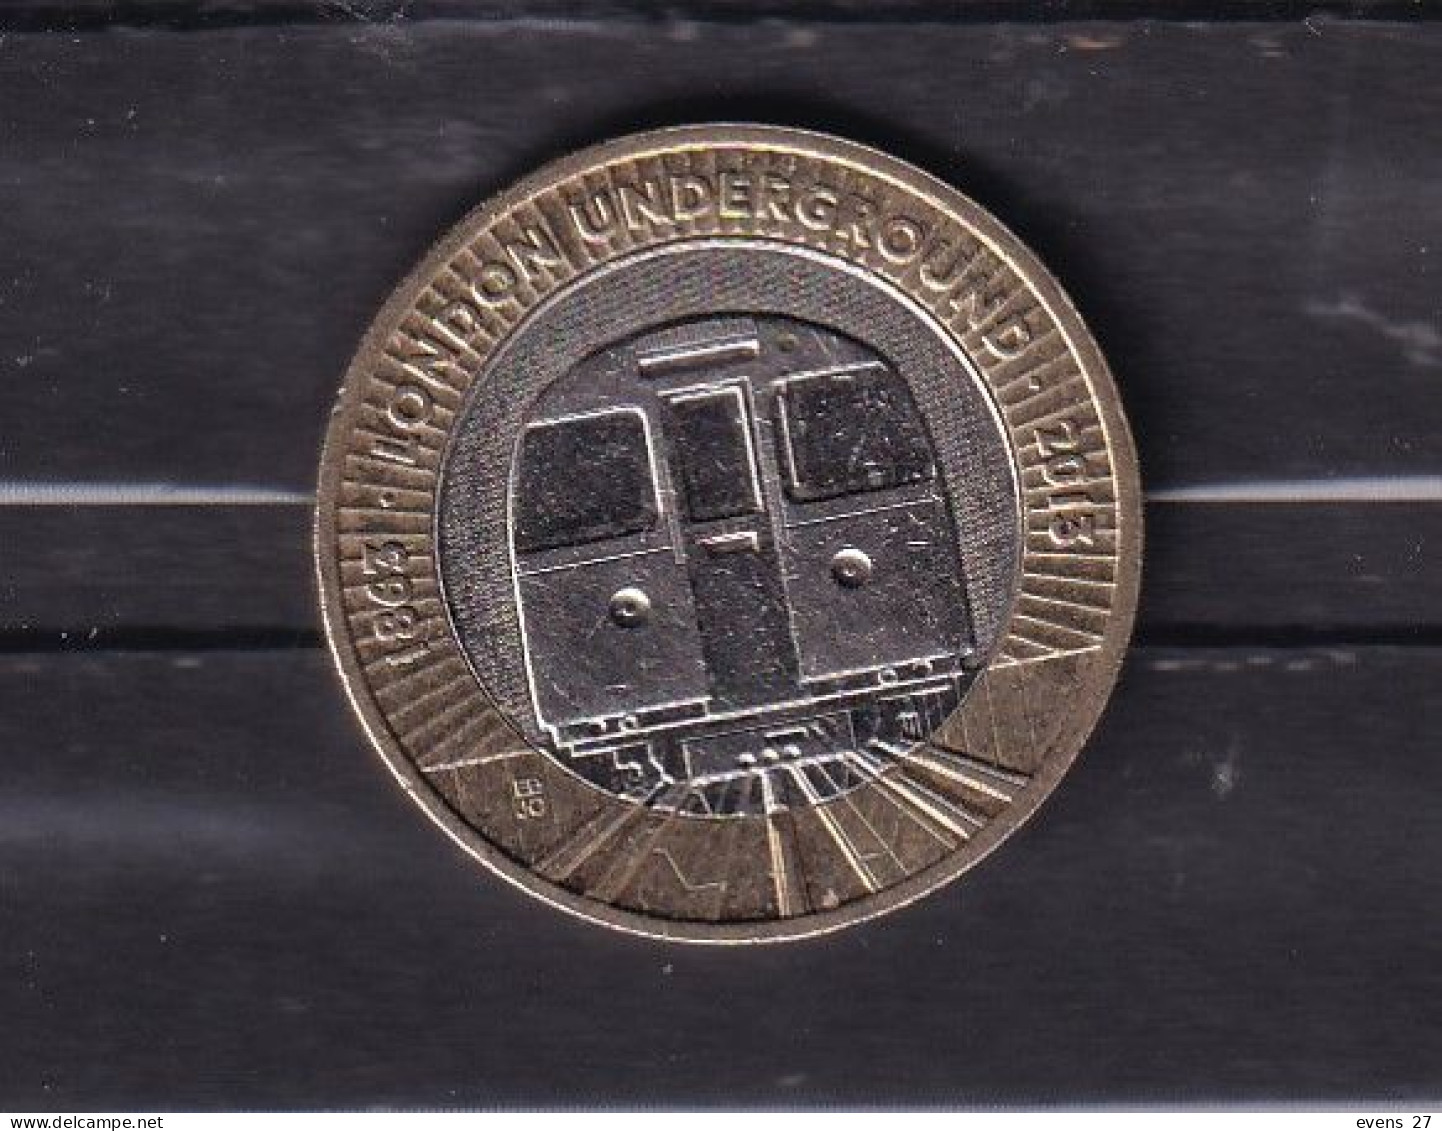 GREAT BRITAIN £2-2013  BI -METALLIC COIN LONDON UNDERGROUND TRAIN-CIRCULATED - 2 Pounds